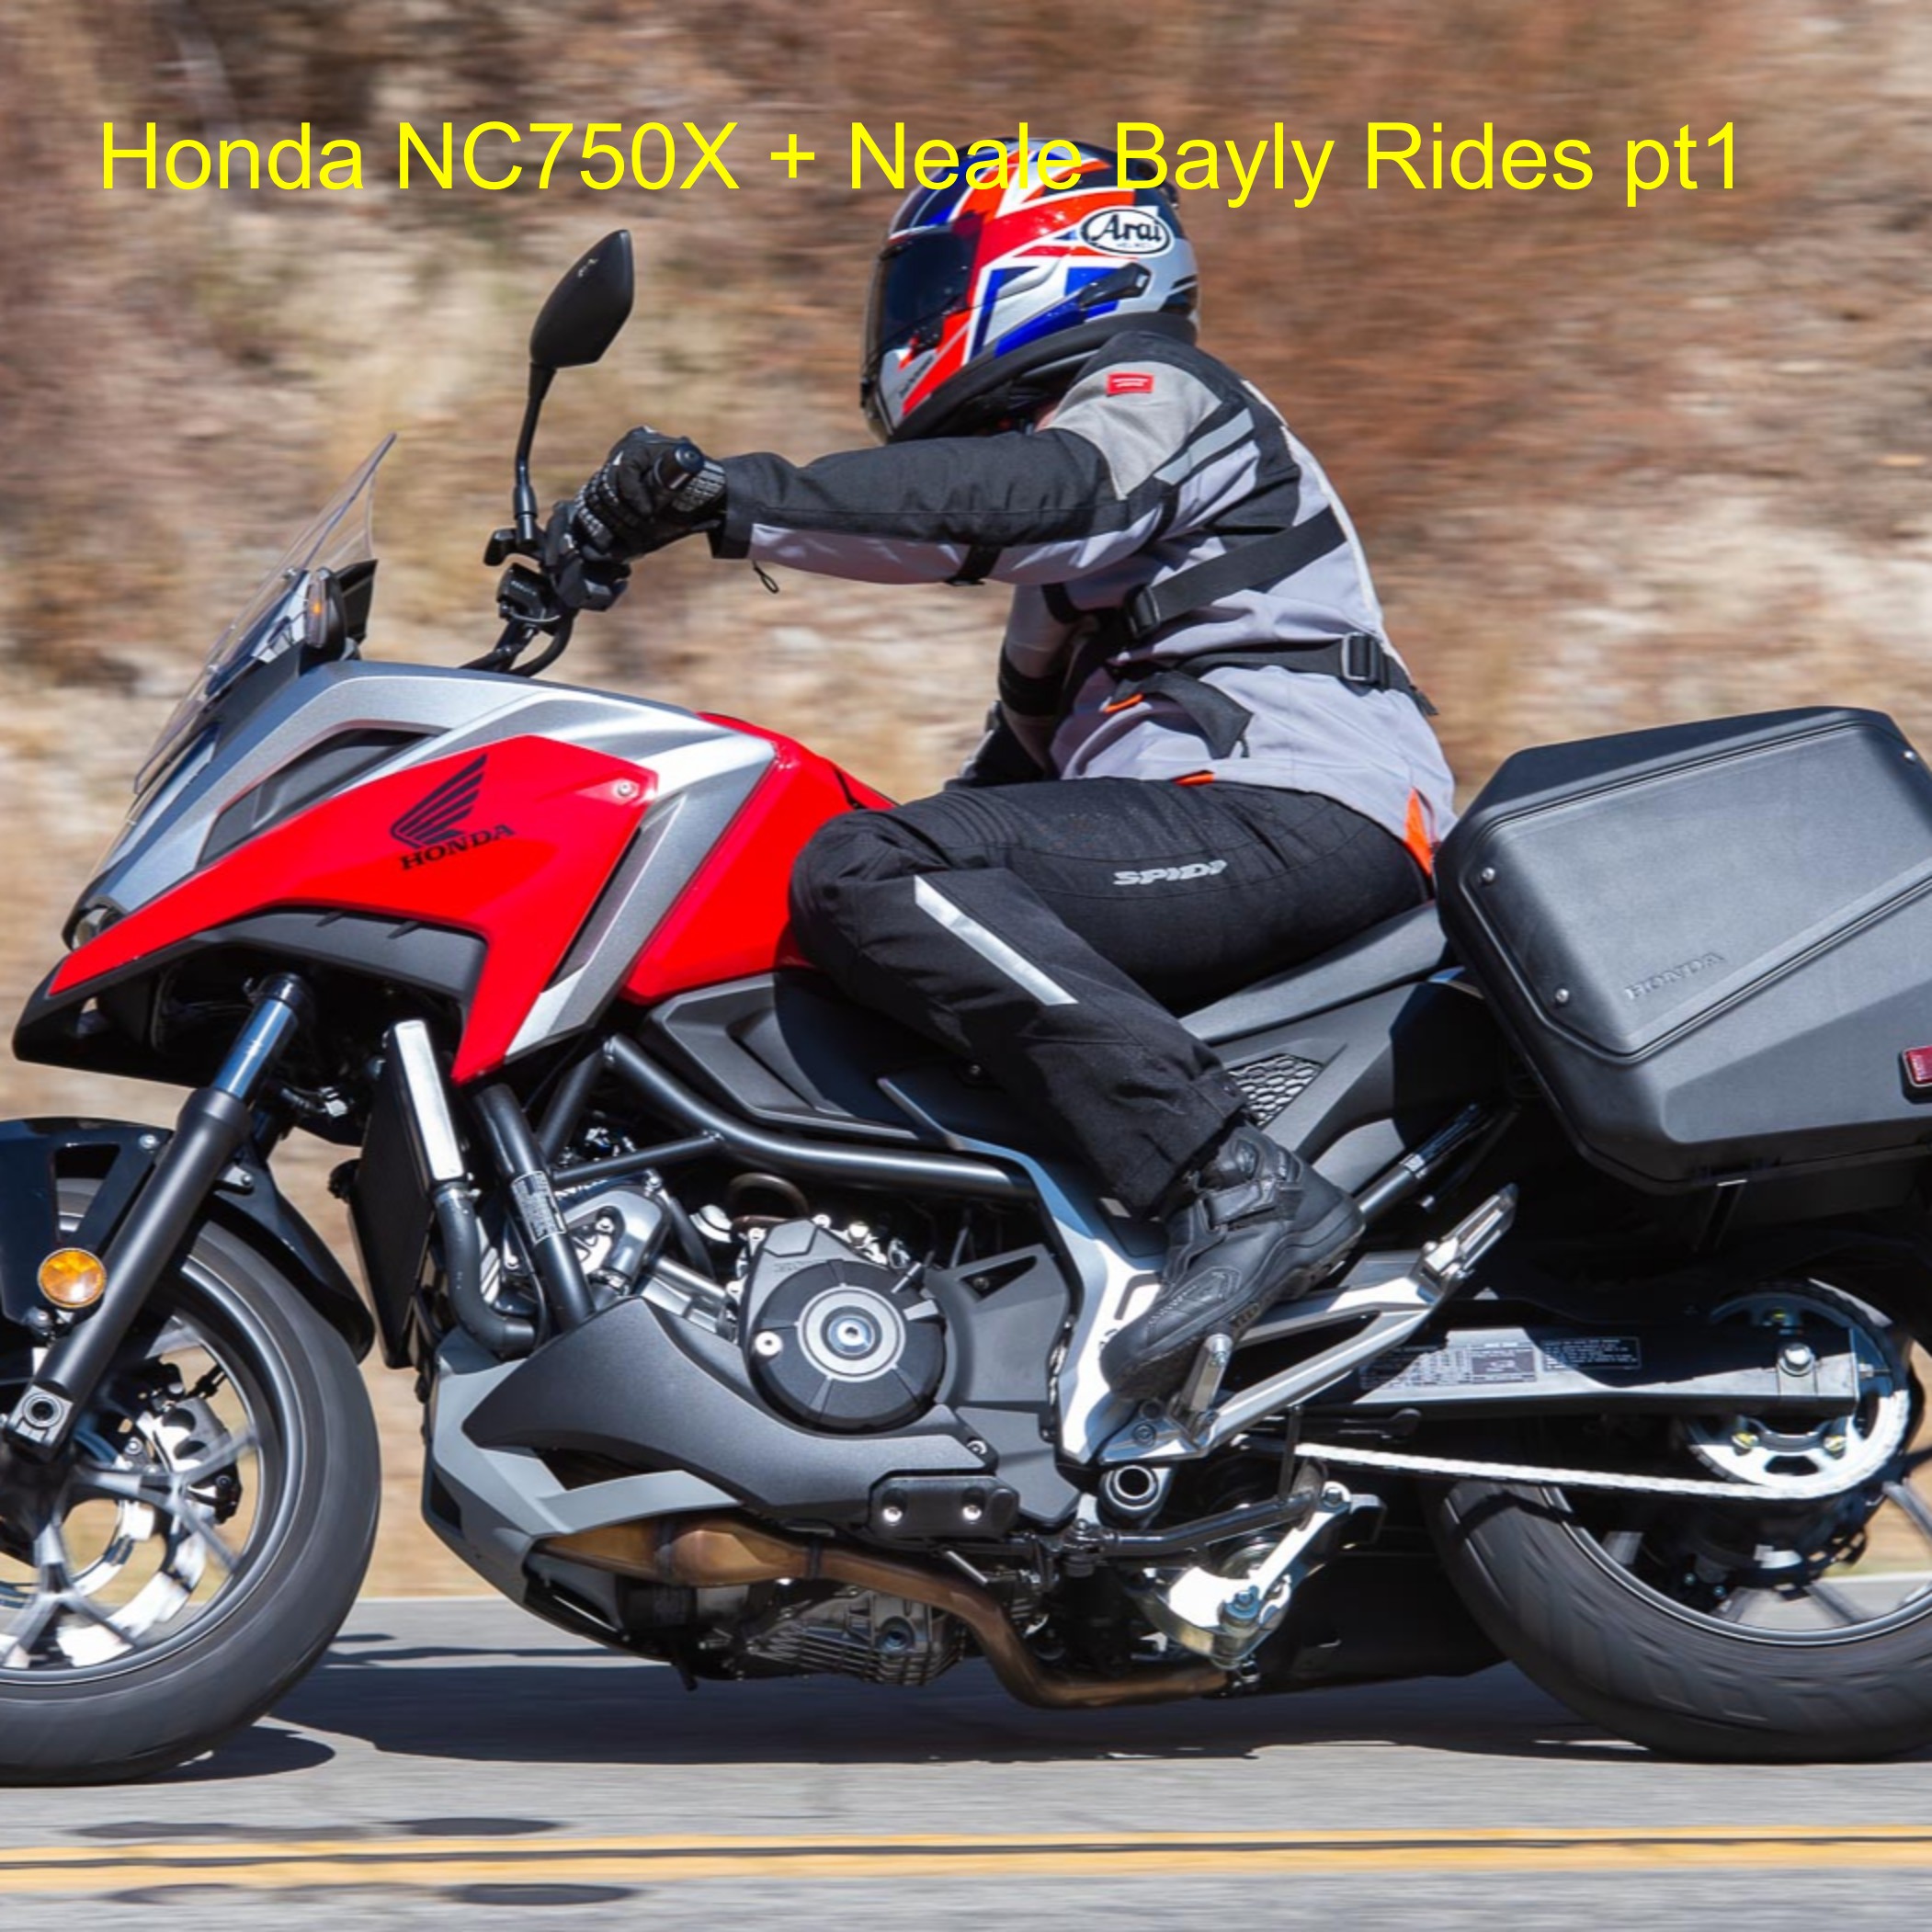 Honda Nc750x Neale Bayly Rides Pt1